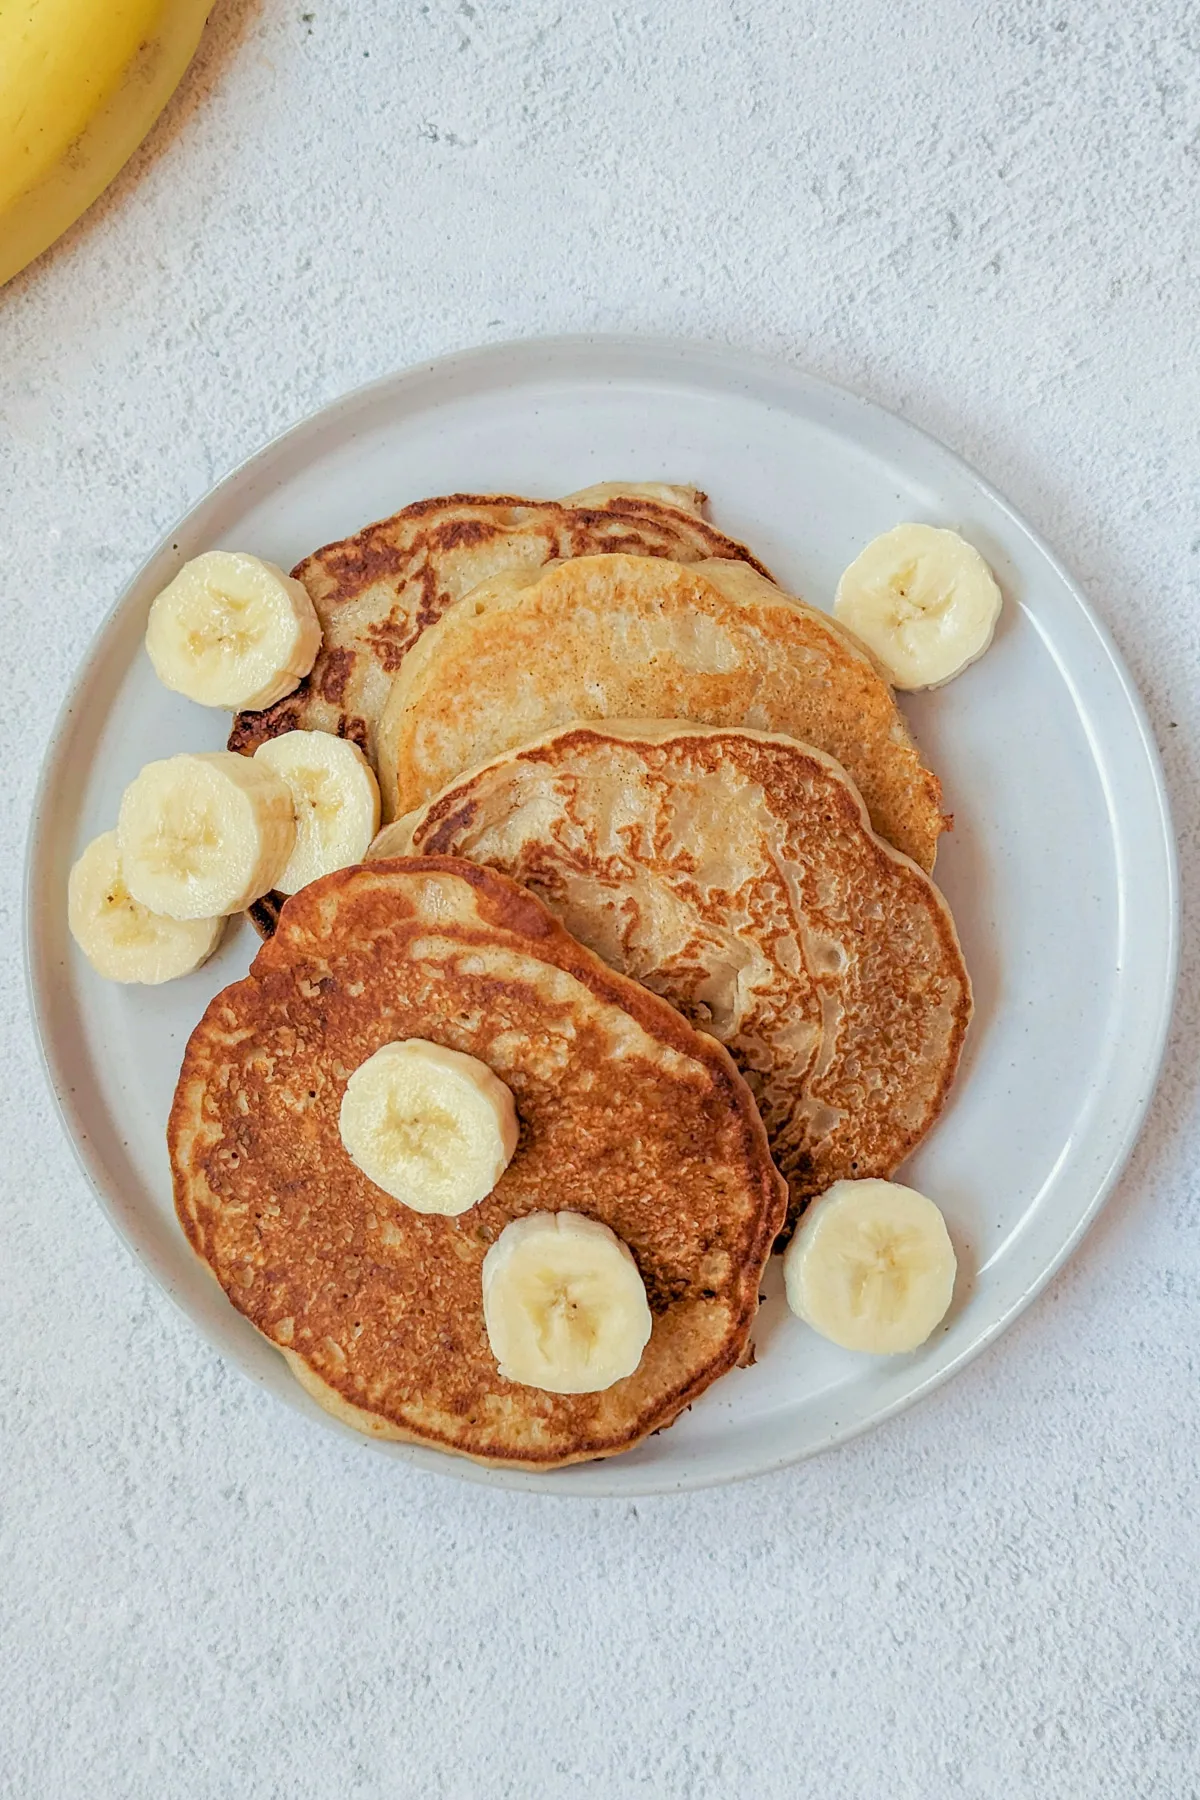 Sourdough banana pancakes with syrup and banana slices.